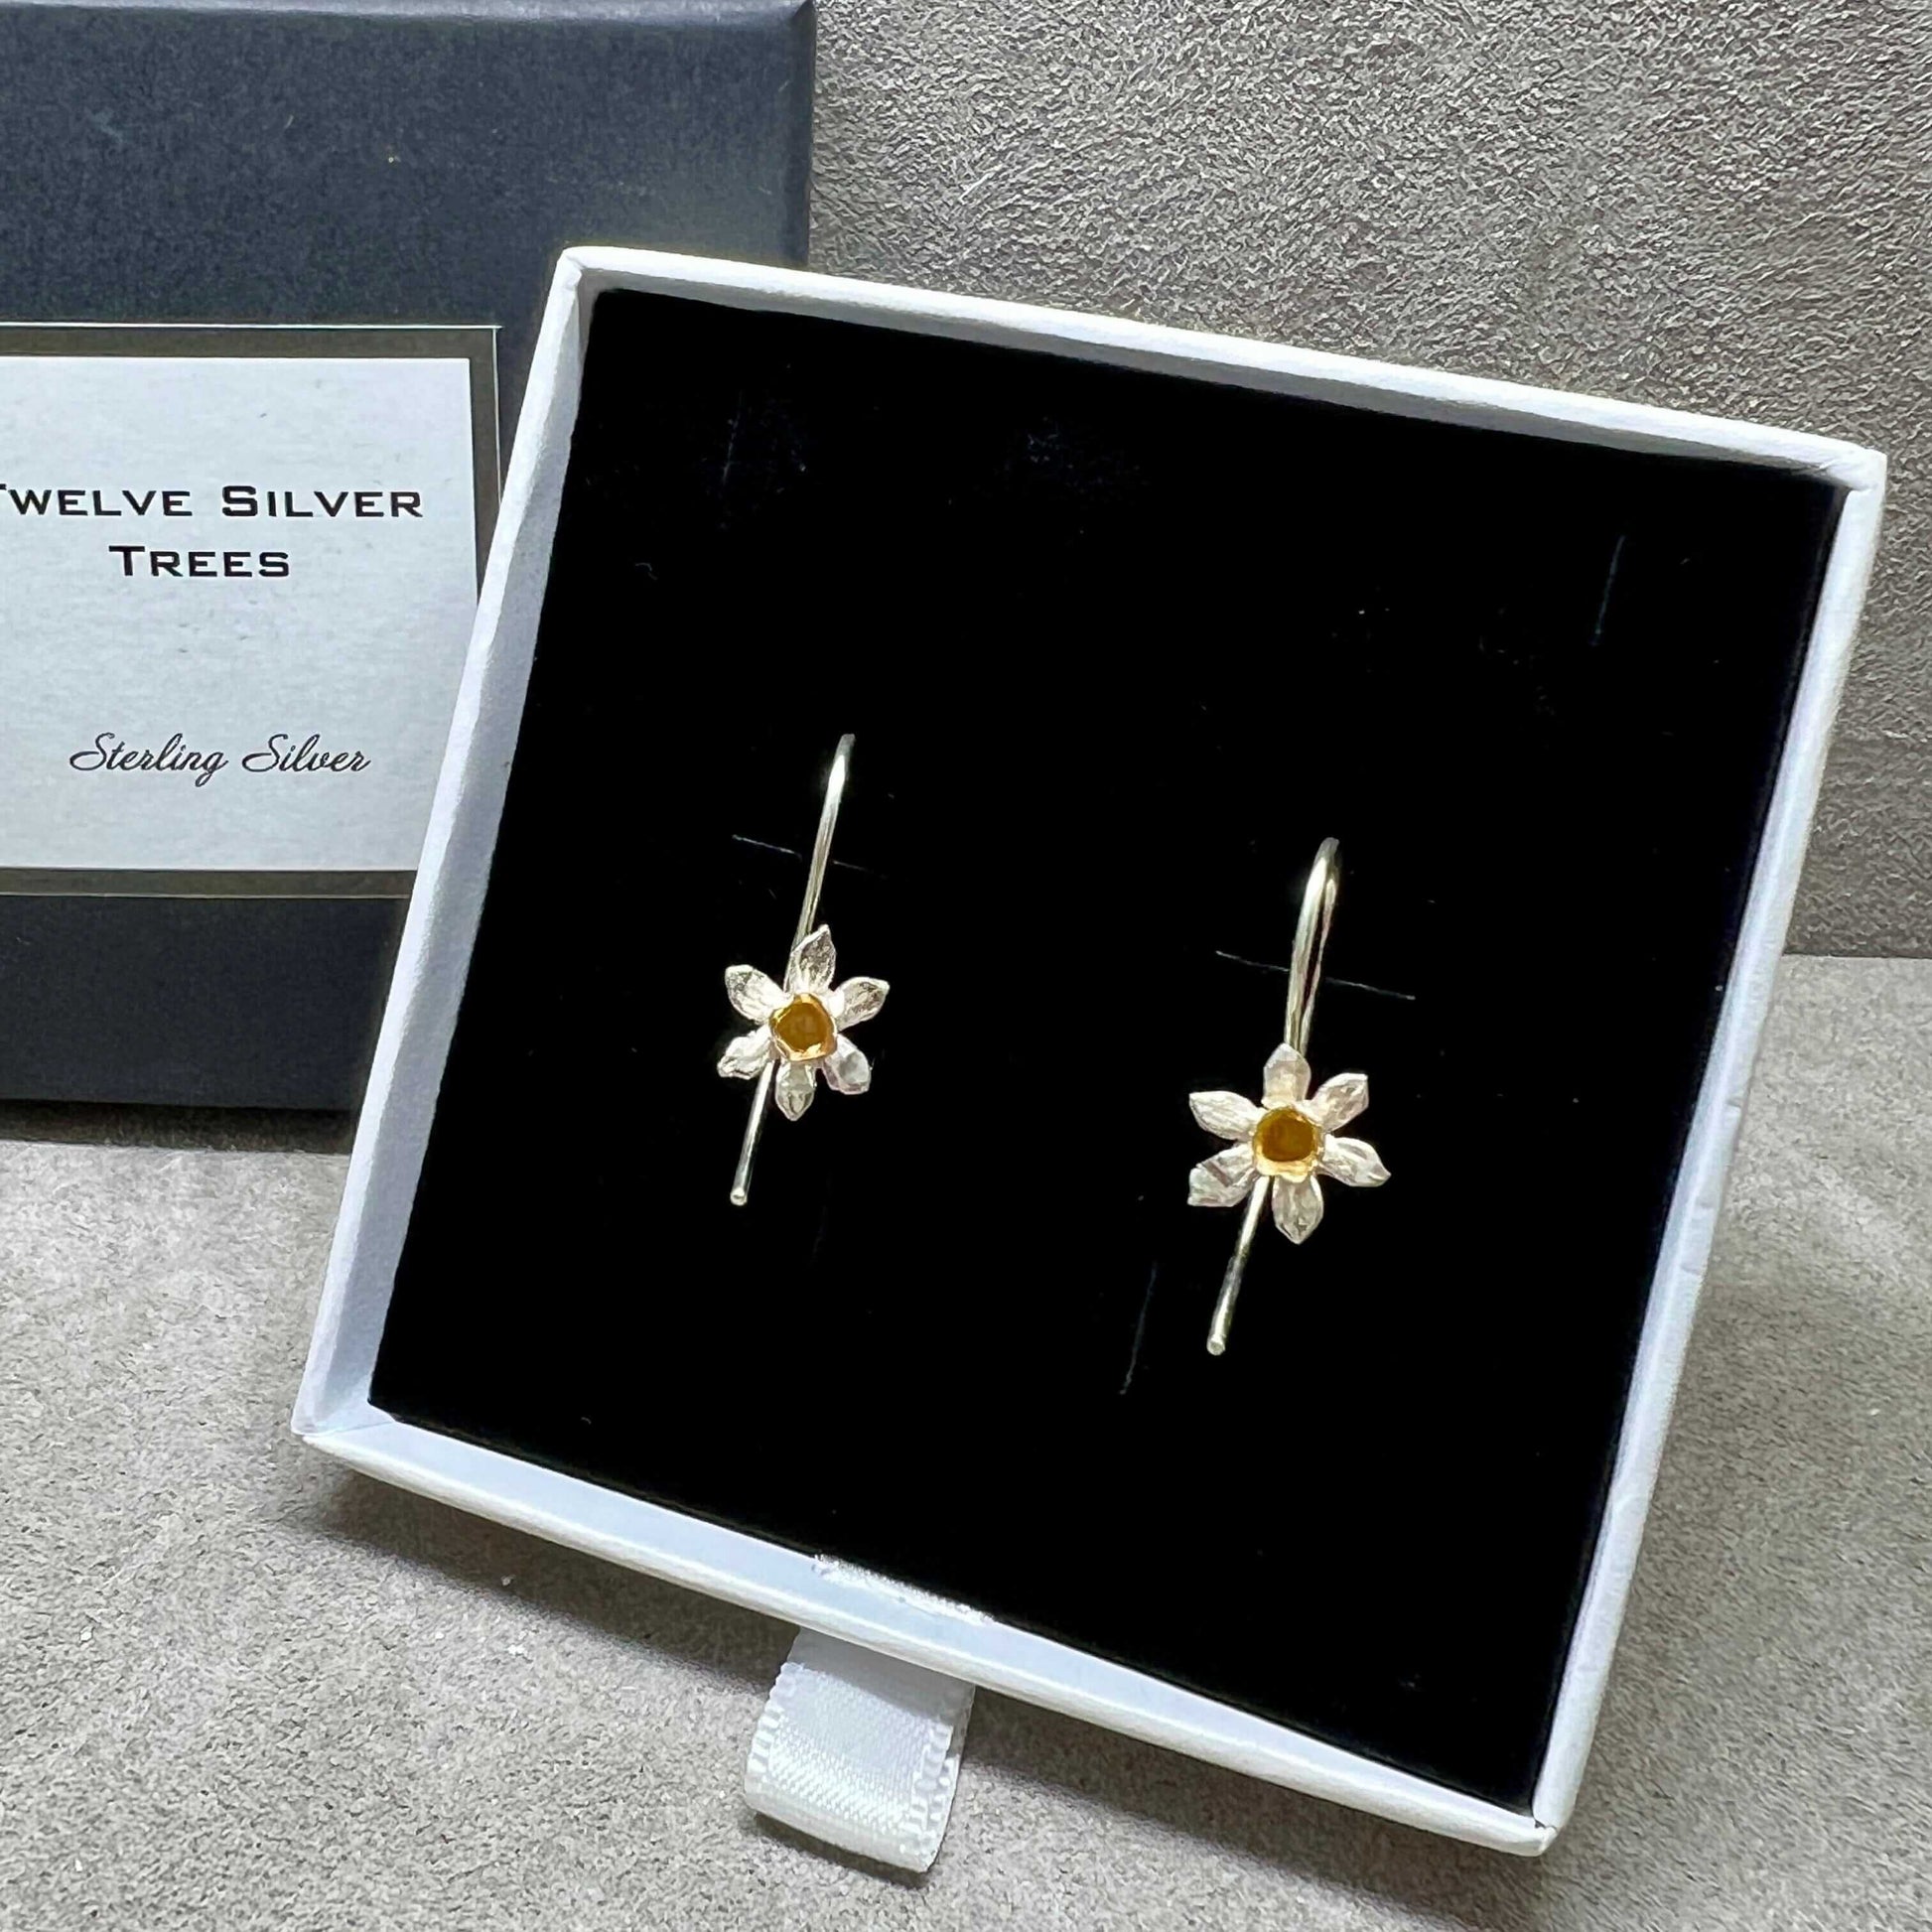 Daffodil Flower Earrings in Sterling Silver & 18 Carat Gold - Twelve Silver Trees